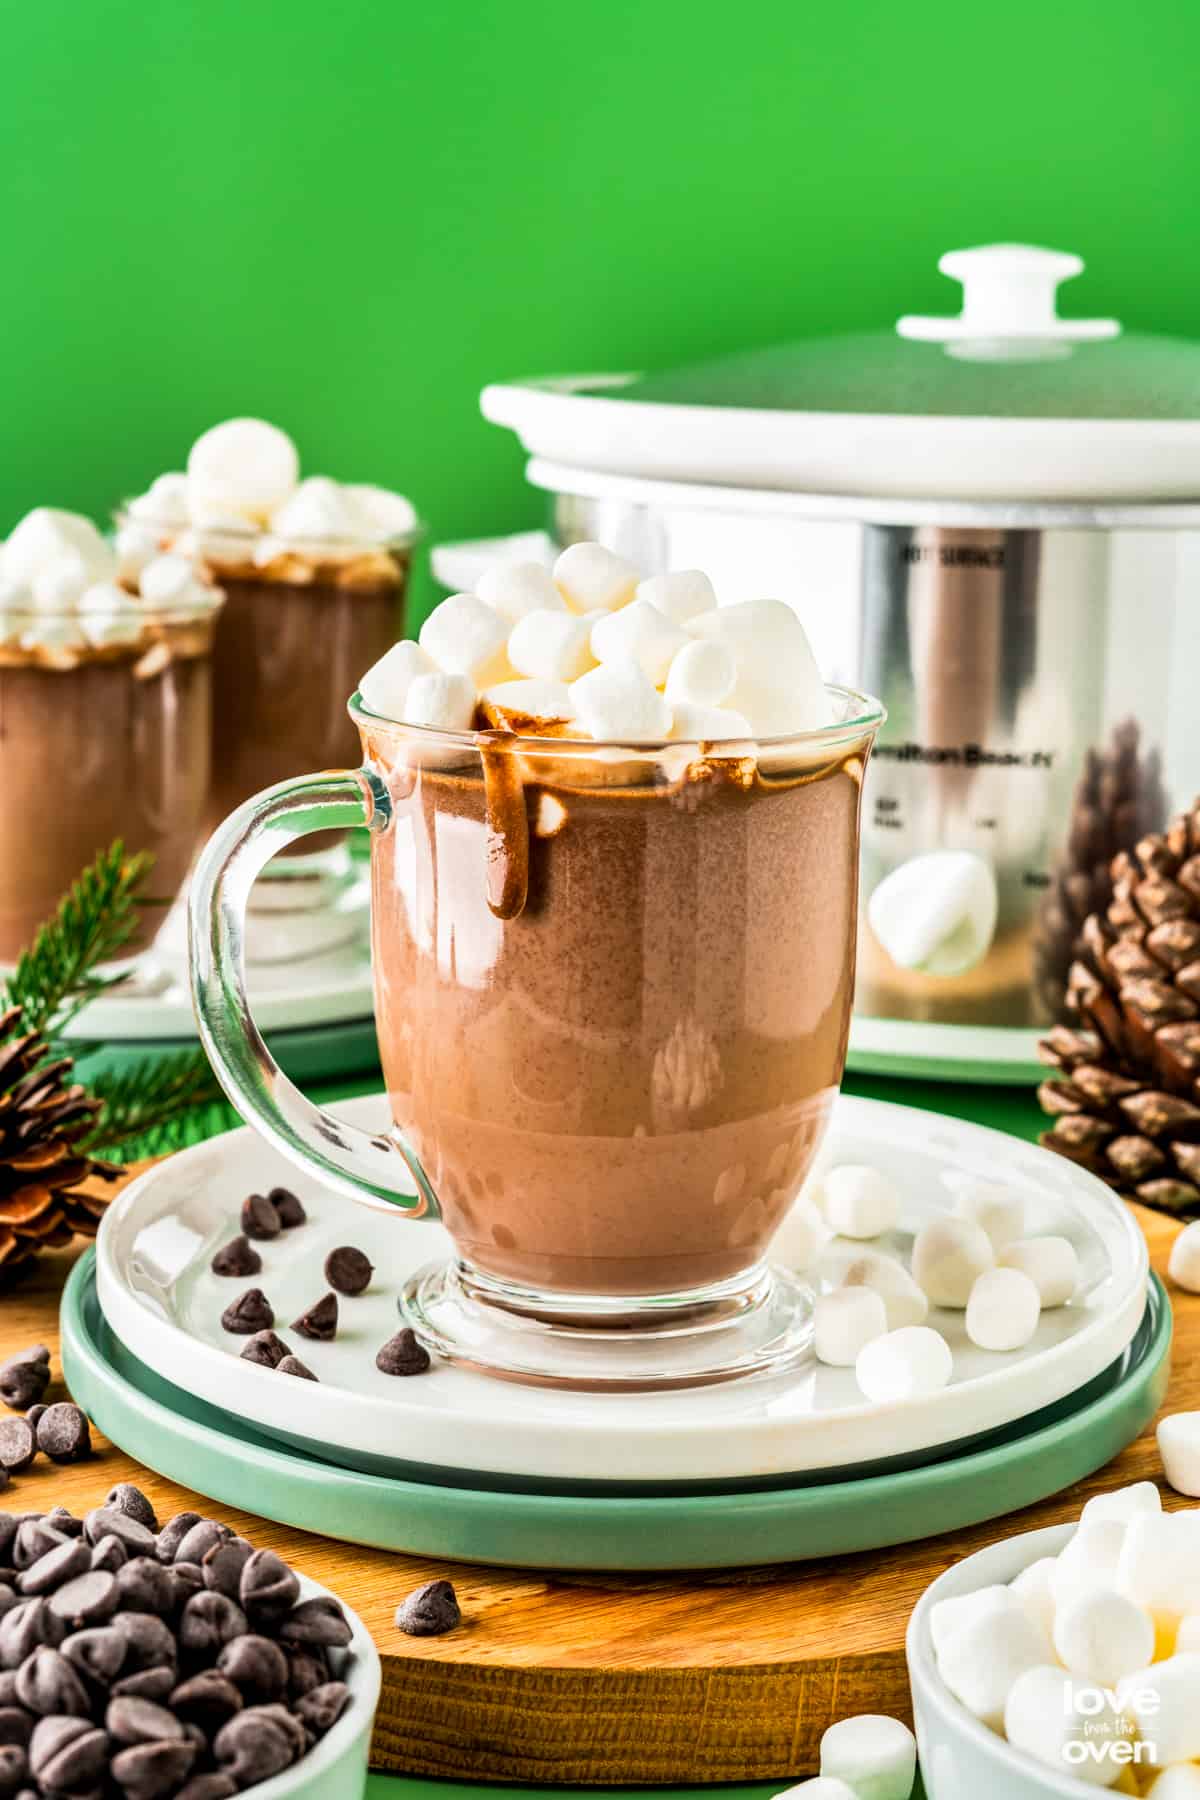 https://www.lovefromtheoven.com/wp-content/uploads/2022/11/crockpot-hot-chocolate-17.jpg